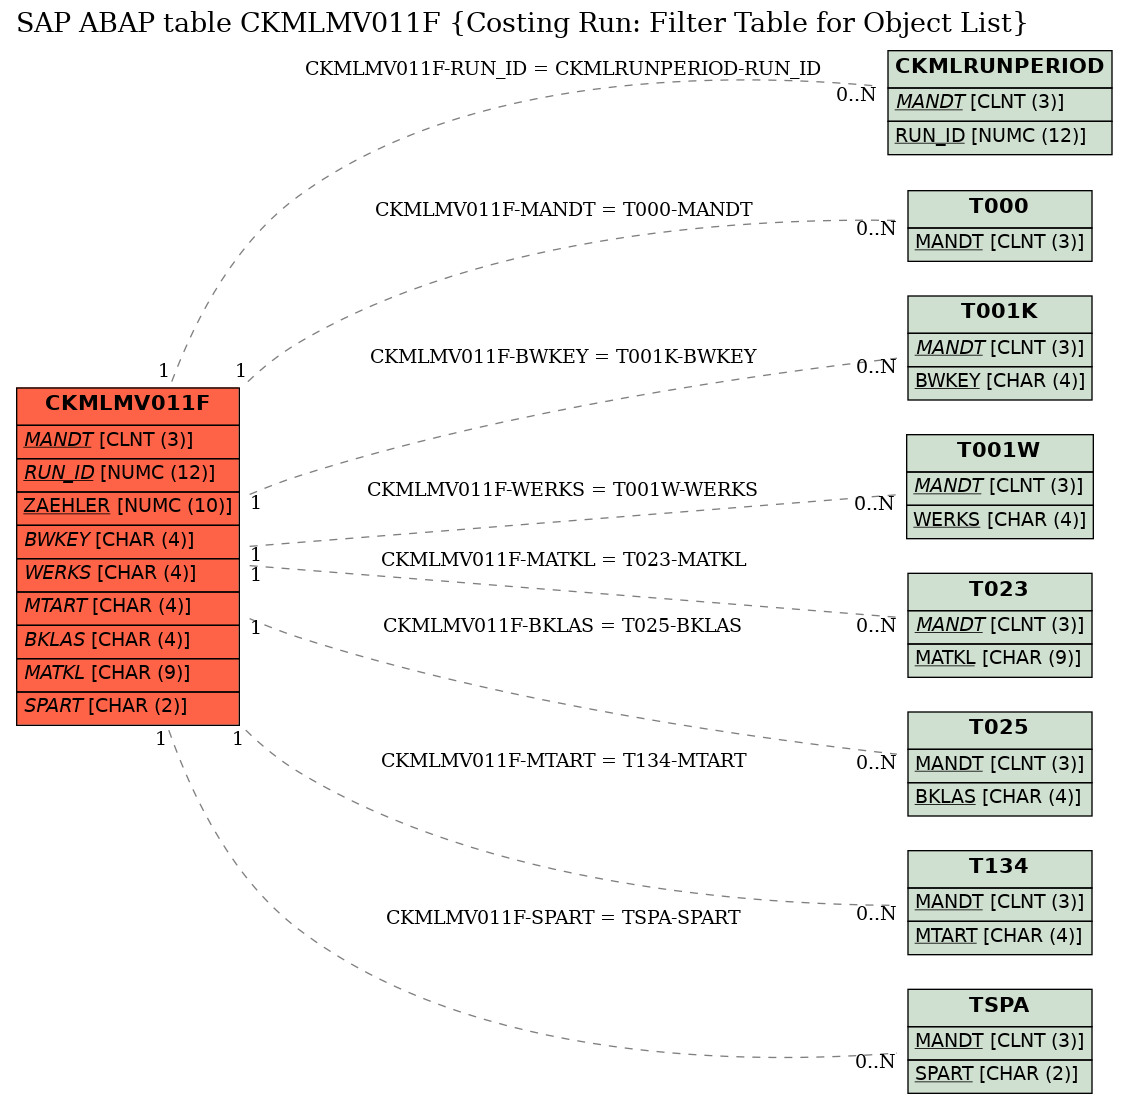 E-R Diagram for table CKMLMV011F (Costing Run: Filter Table for Object List)